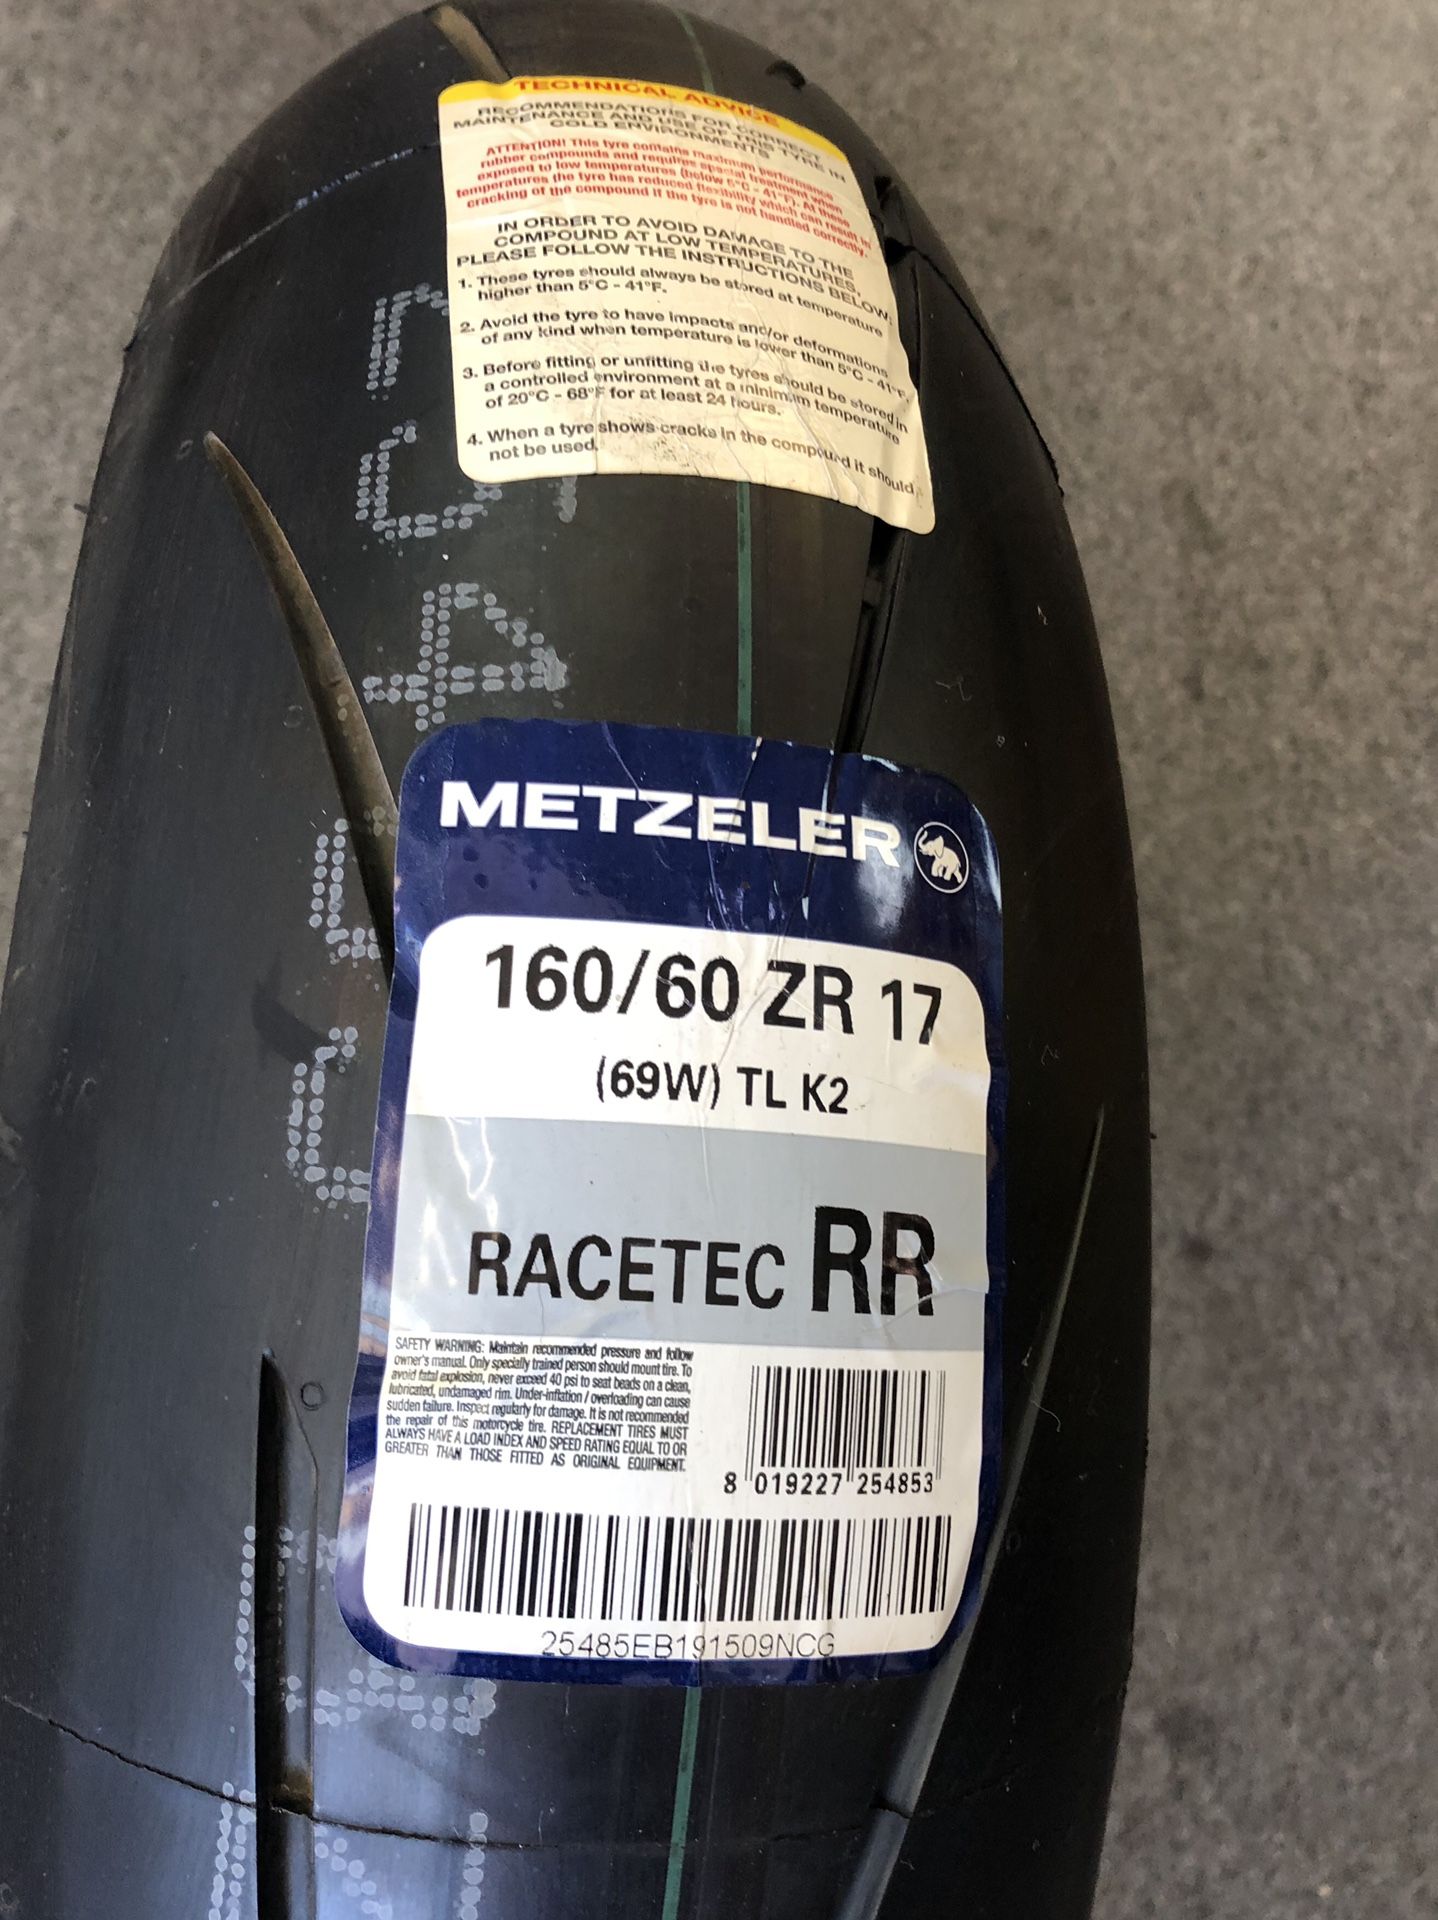 Metzeler Racetec RR track day sport tire 160/60-17 new